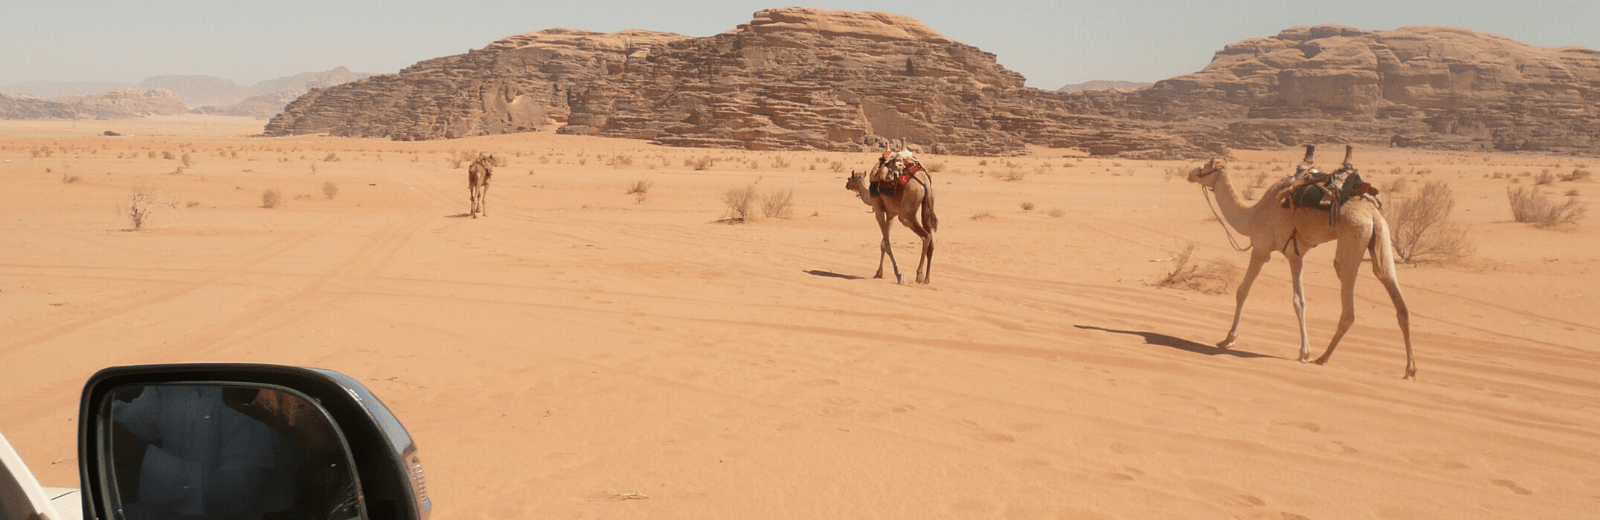 Jeep tours Wadi Rum, Jordan Desert Journeys